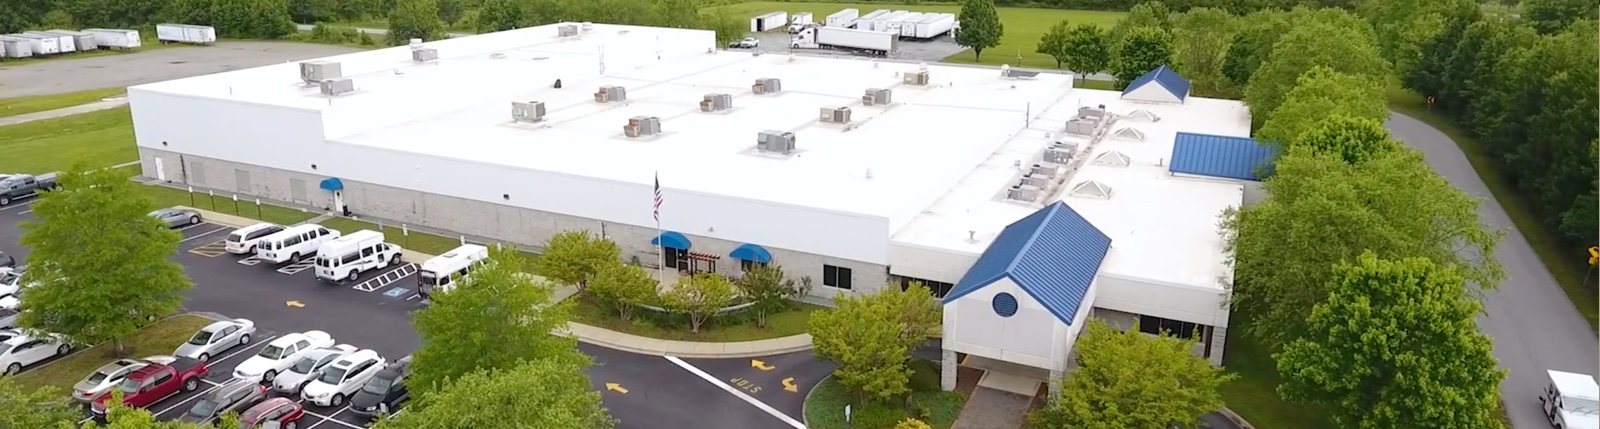 Aerial photograph of the TVS facility in Brevard, North Carolina.